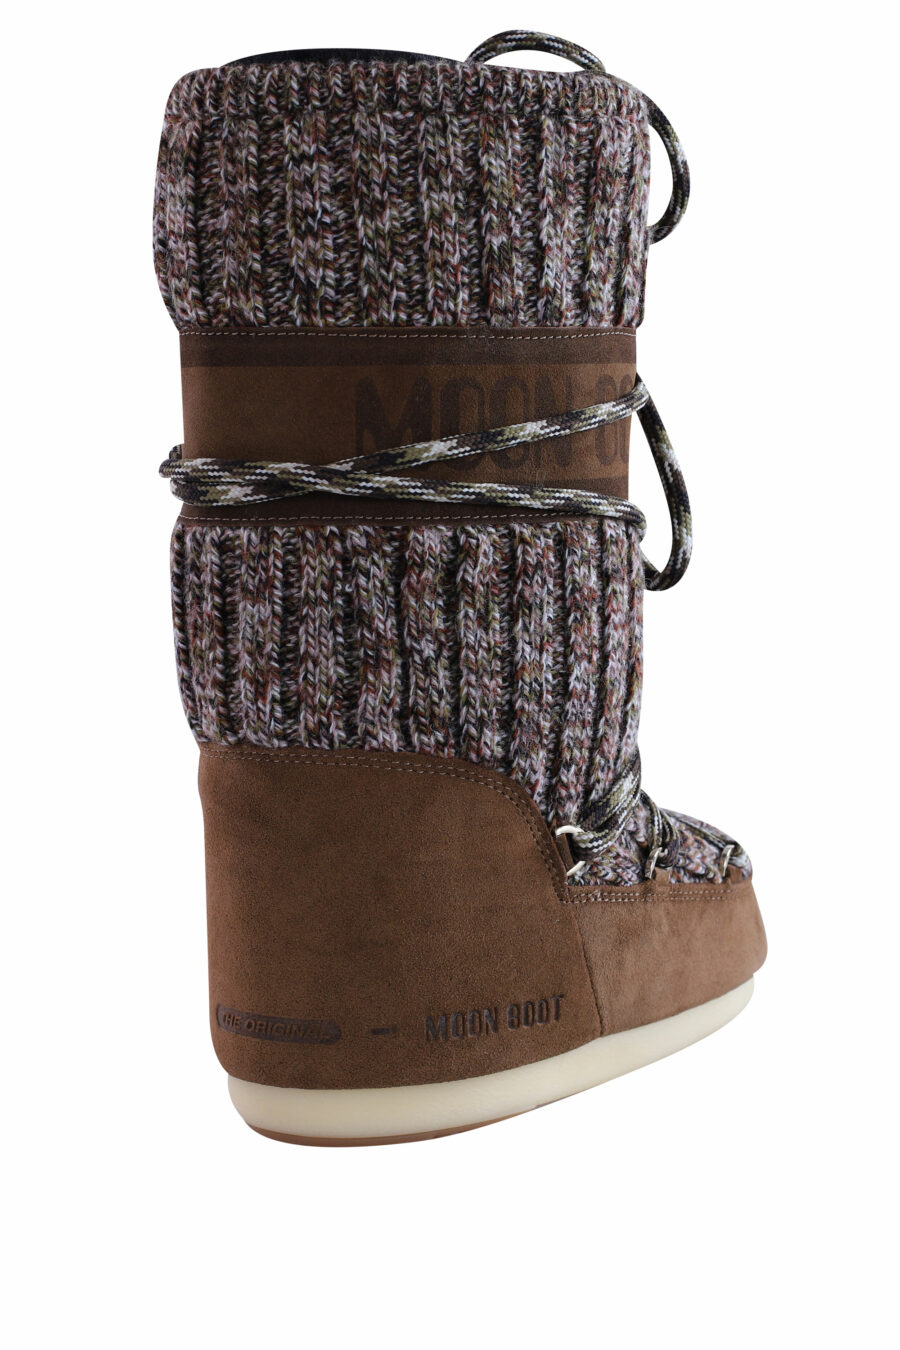 Botas marrón de nieve con detalles en lana - IMG 2971